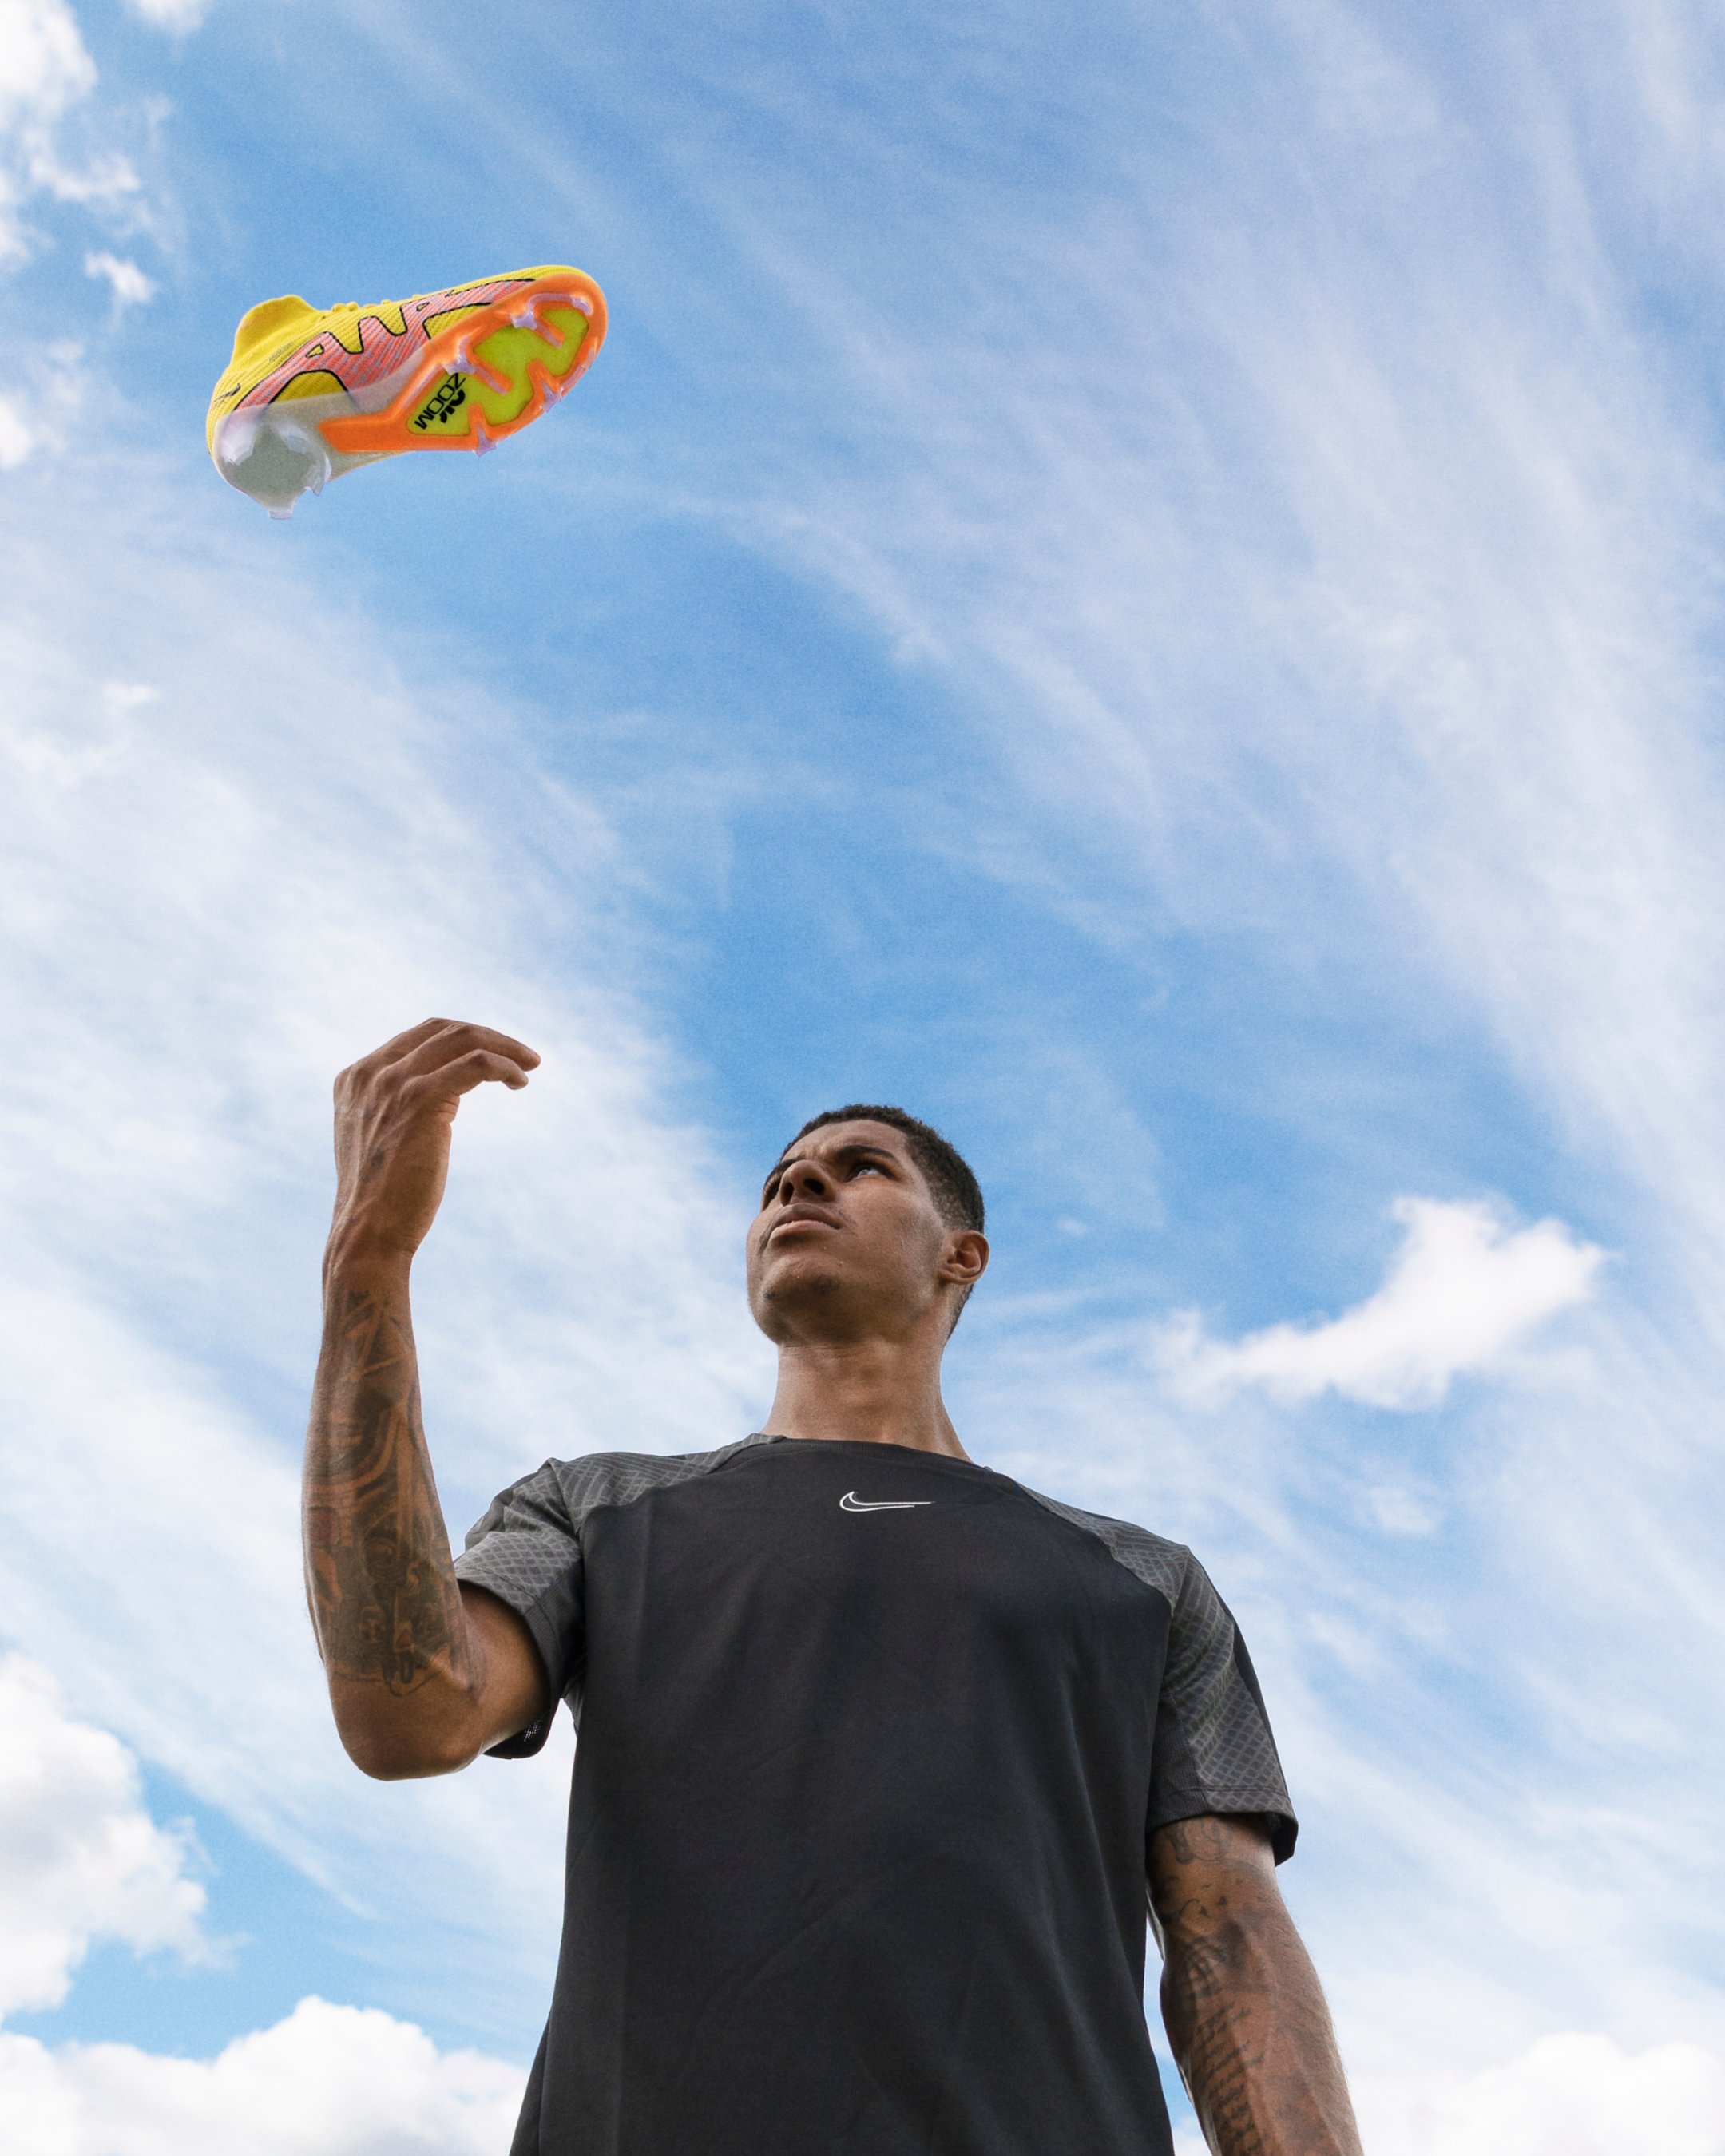 Nike Football on X: "Air + Mercurial + @MarcusRashford =  Get the Air Zoom Mercurial in the Lucent colourway now: https://t.co/xoV74b4eDo https://t.co/q5sOpvvXXF" / X